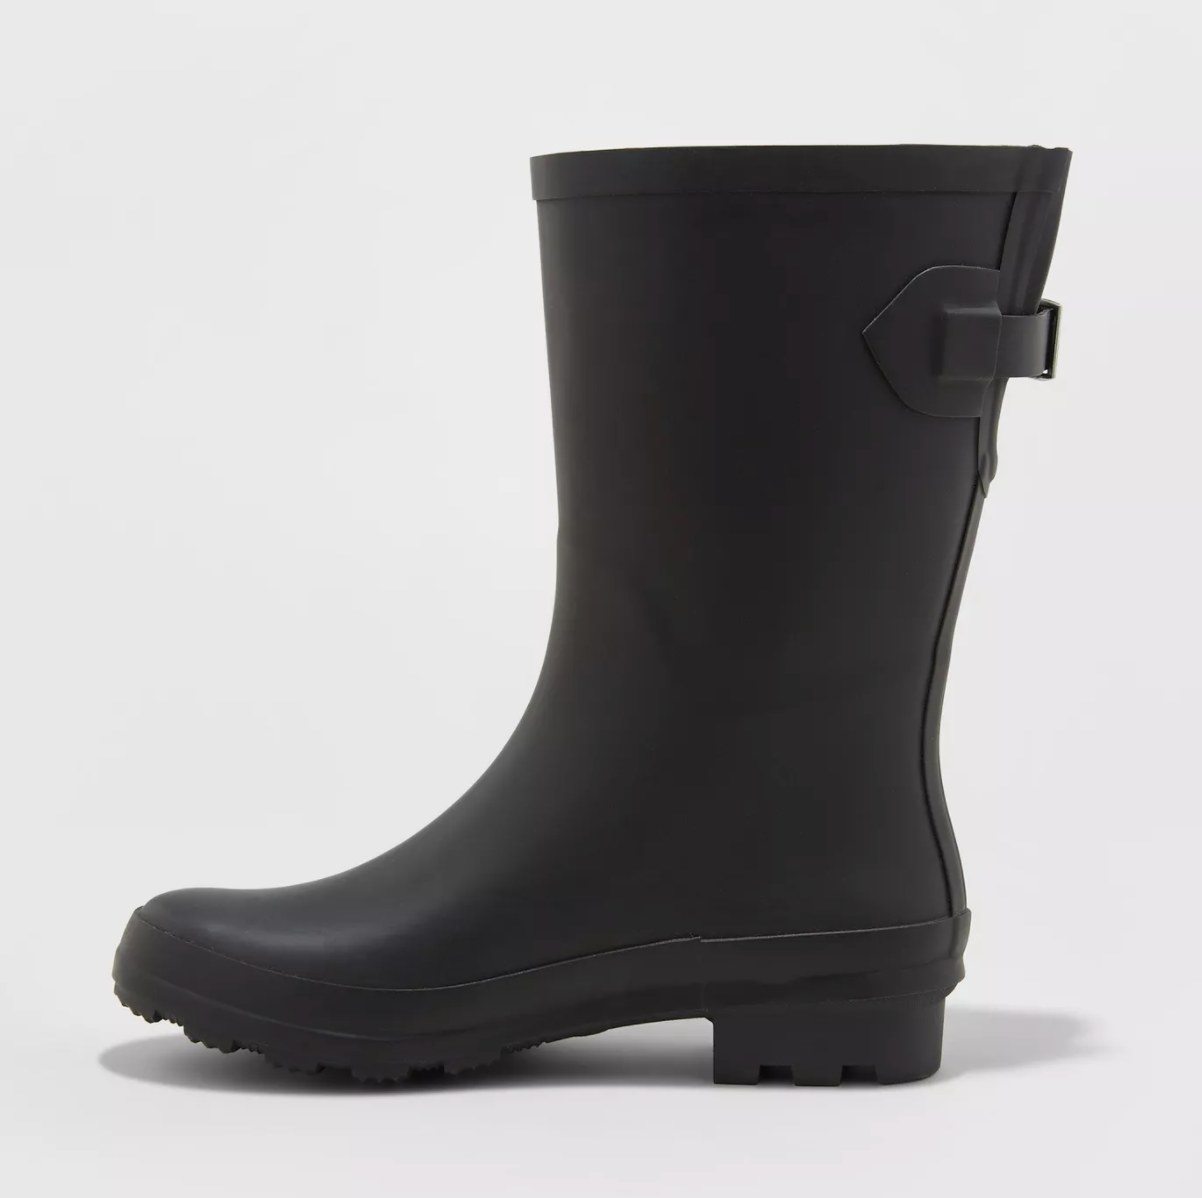 the black rain boots